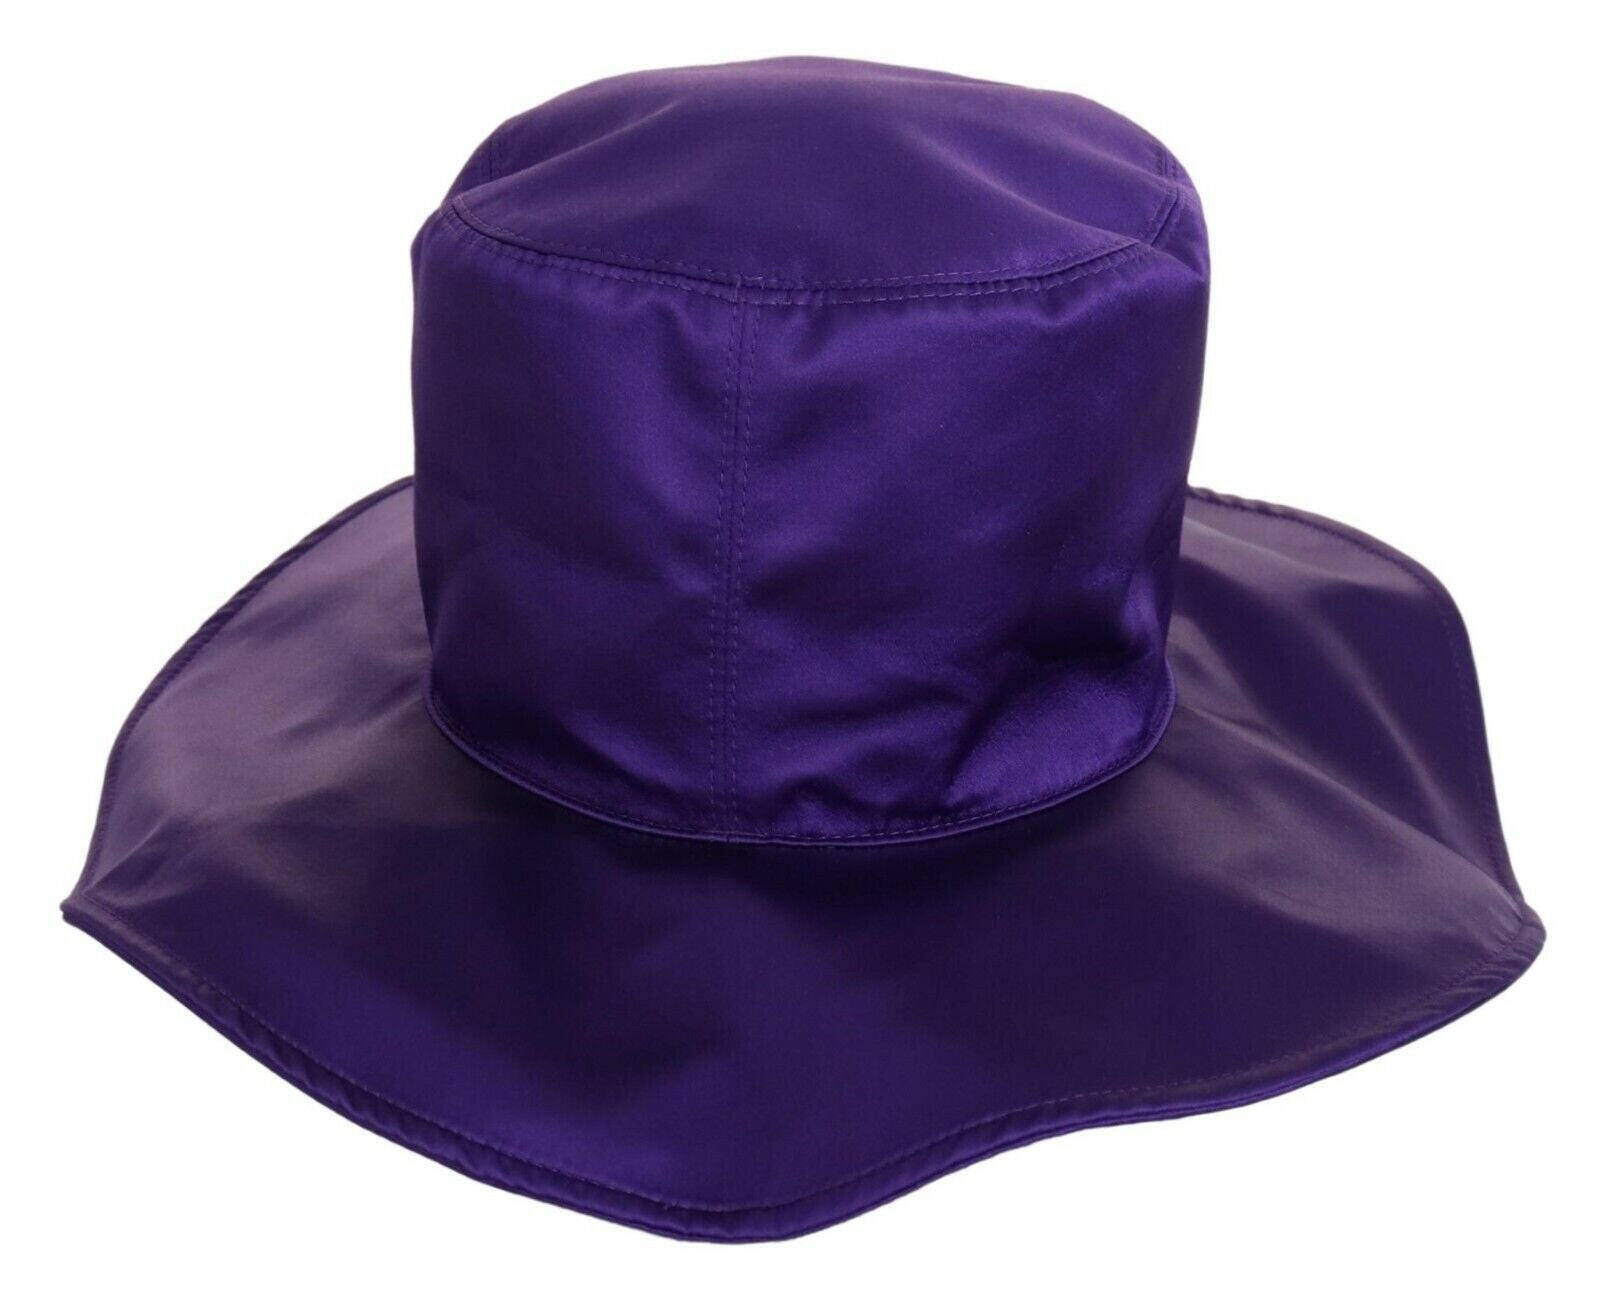 Dolce & Gabbana Purple Silk Stretch Top Hat - GENUINE AUTHENTIC BRAND LLC  